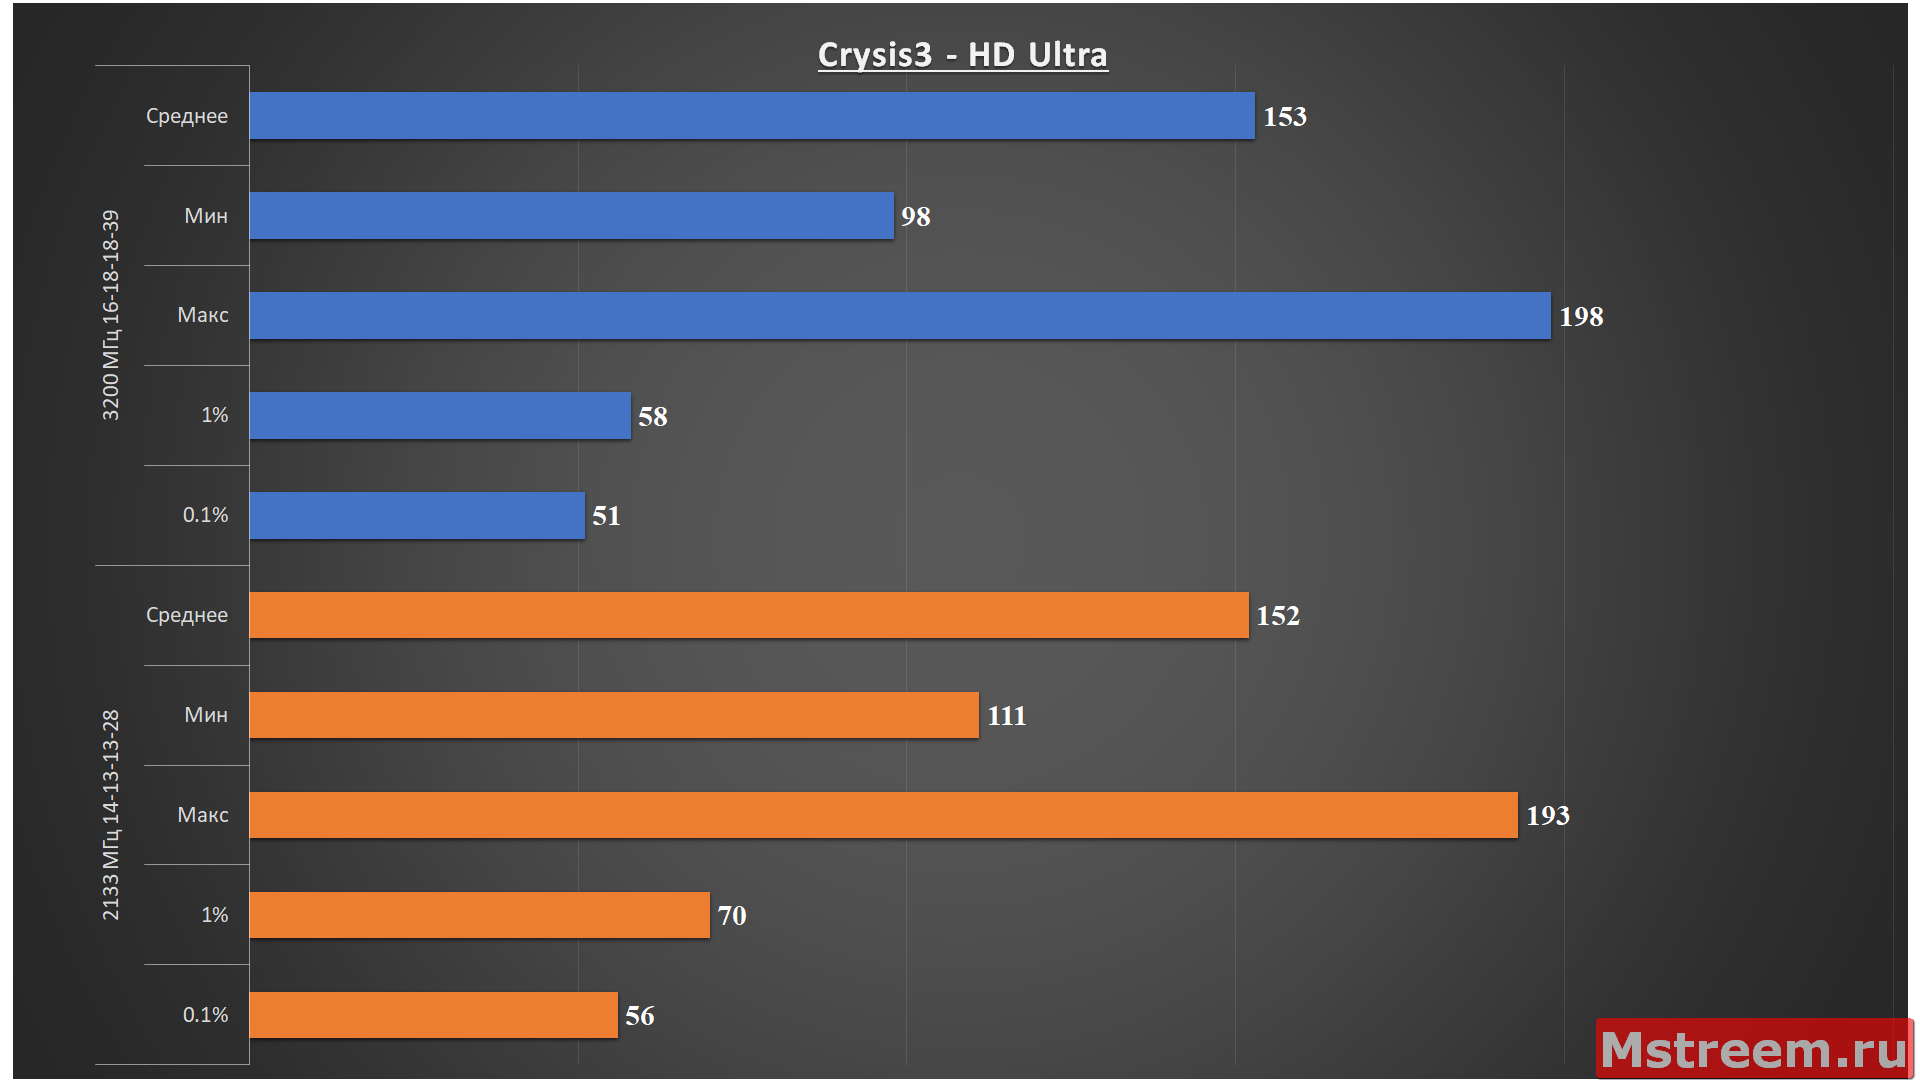 Crysis3 2133 МГц vs 3200 МГц